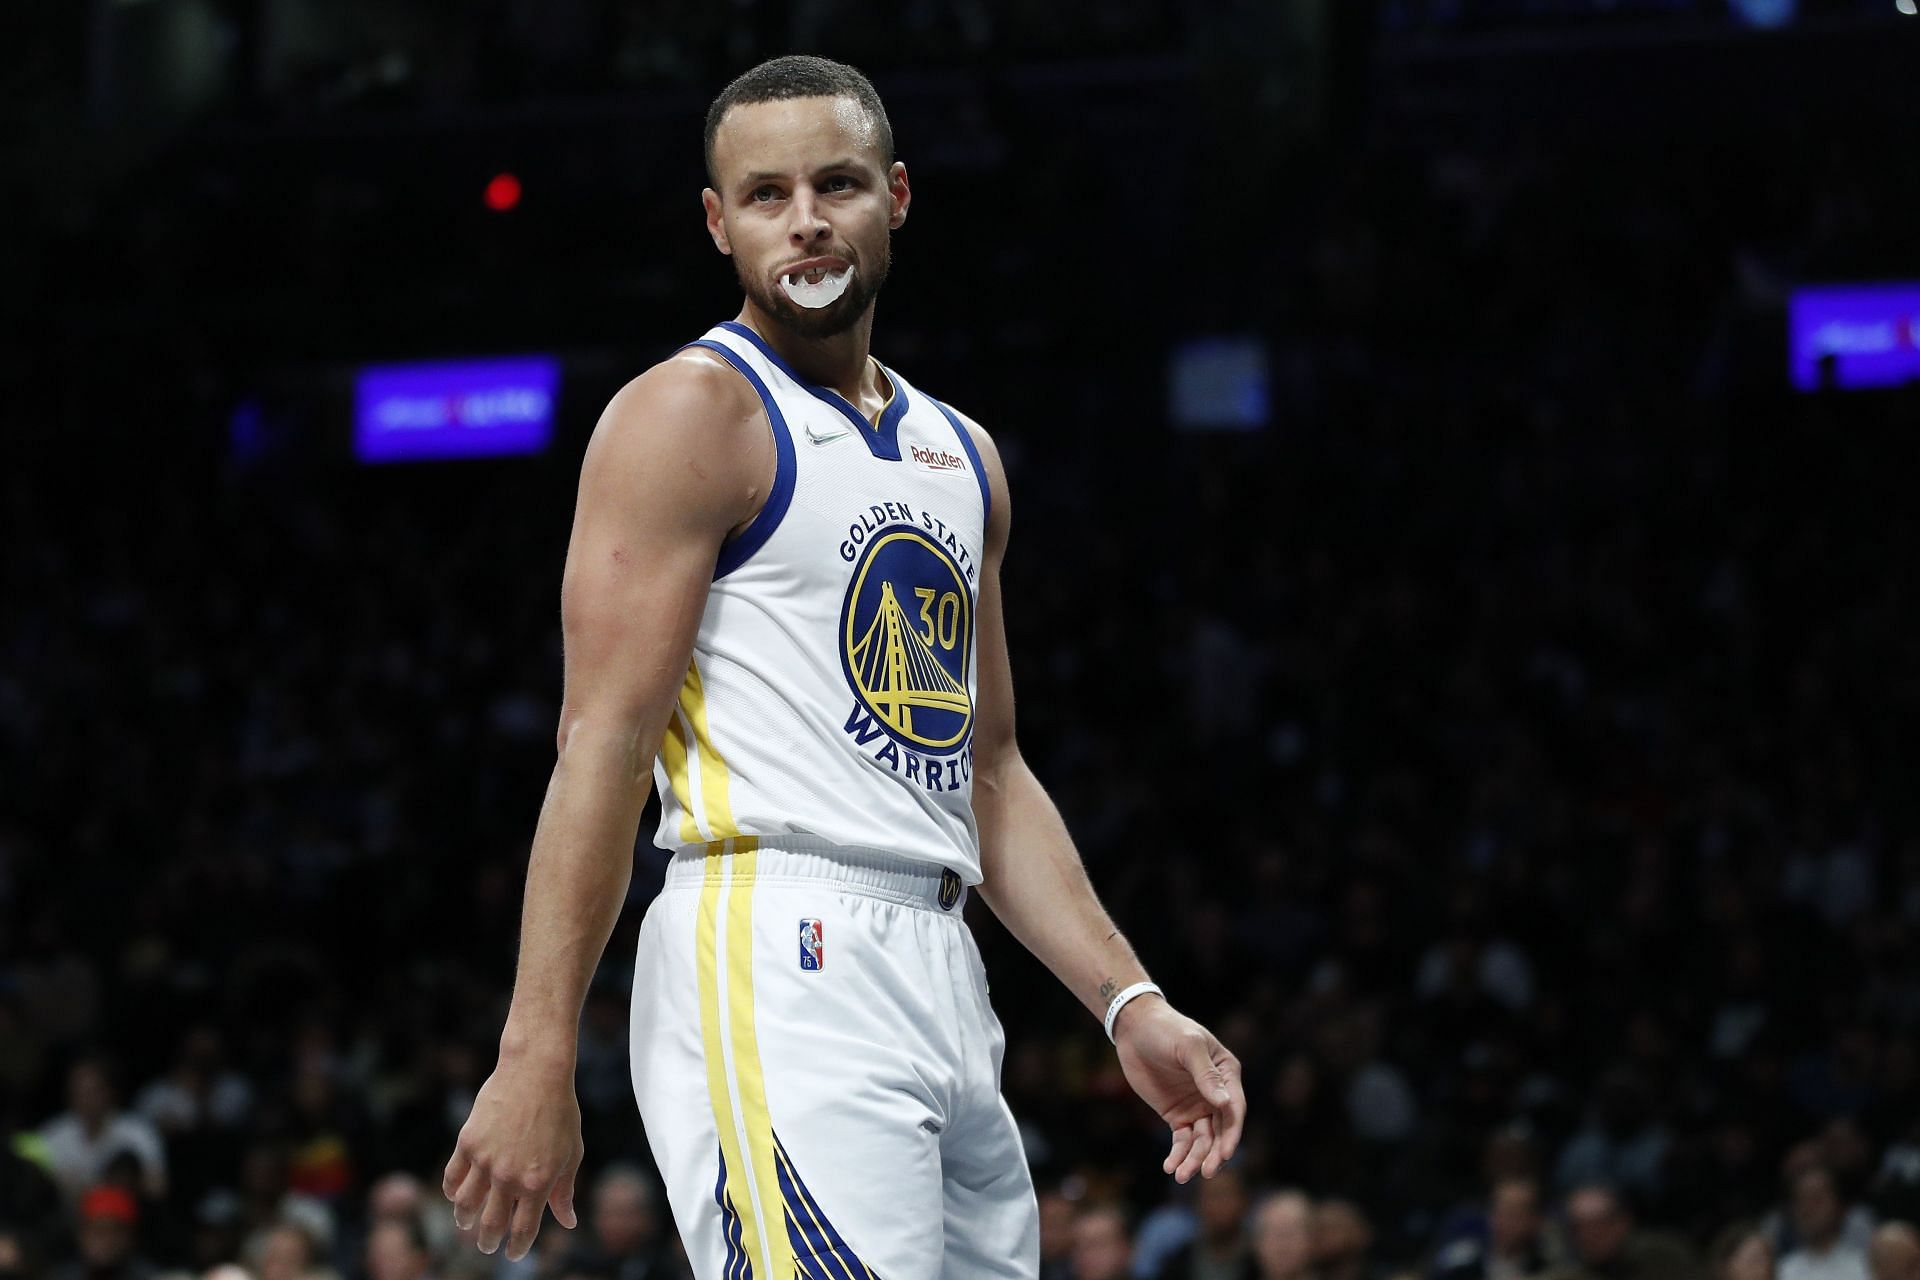 Golden State Warriors superstar Stephen Curry has shown improvement defensively